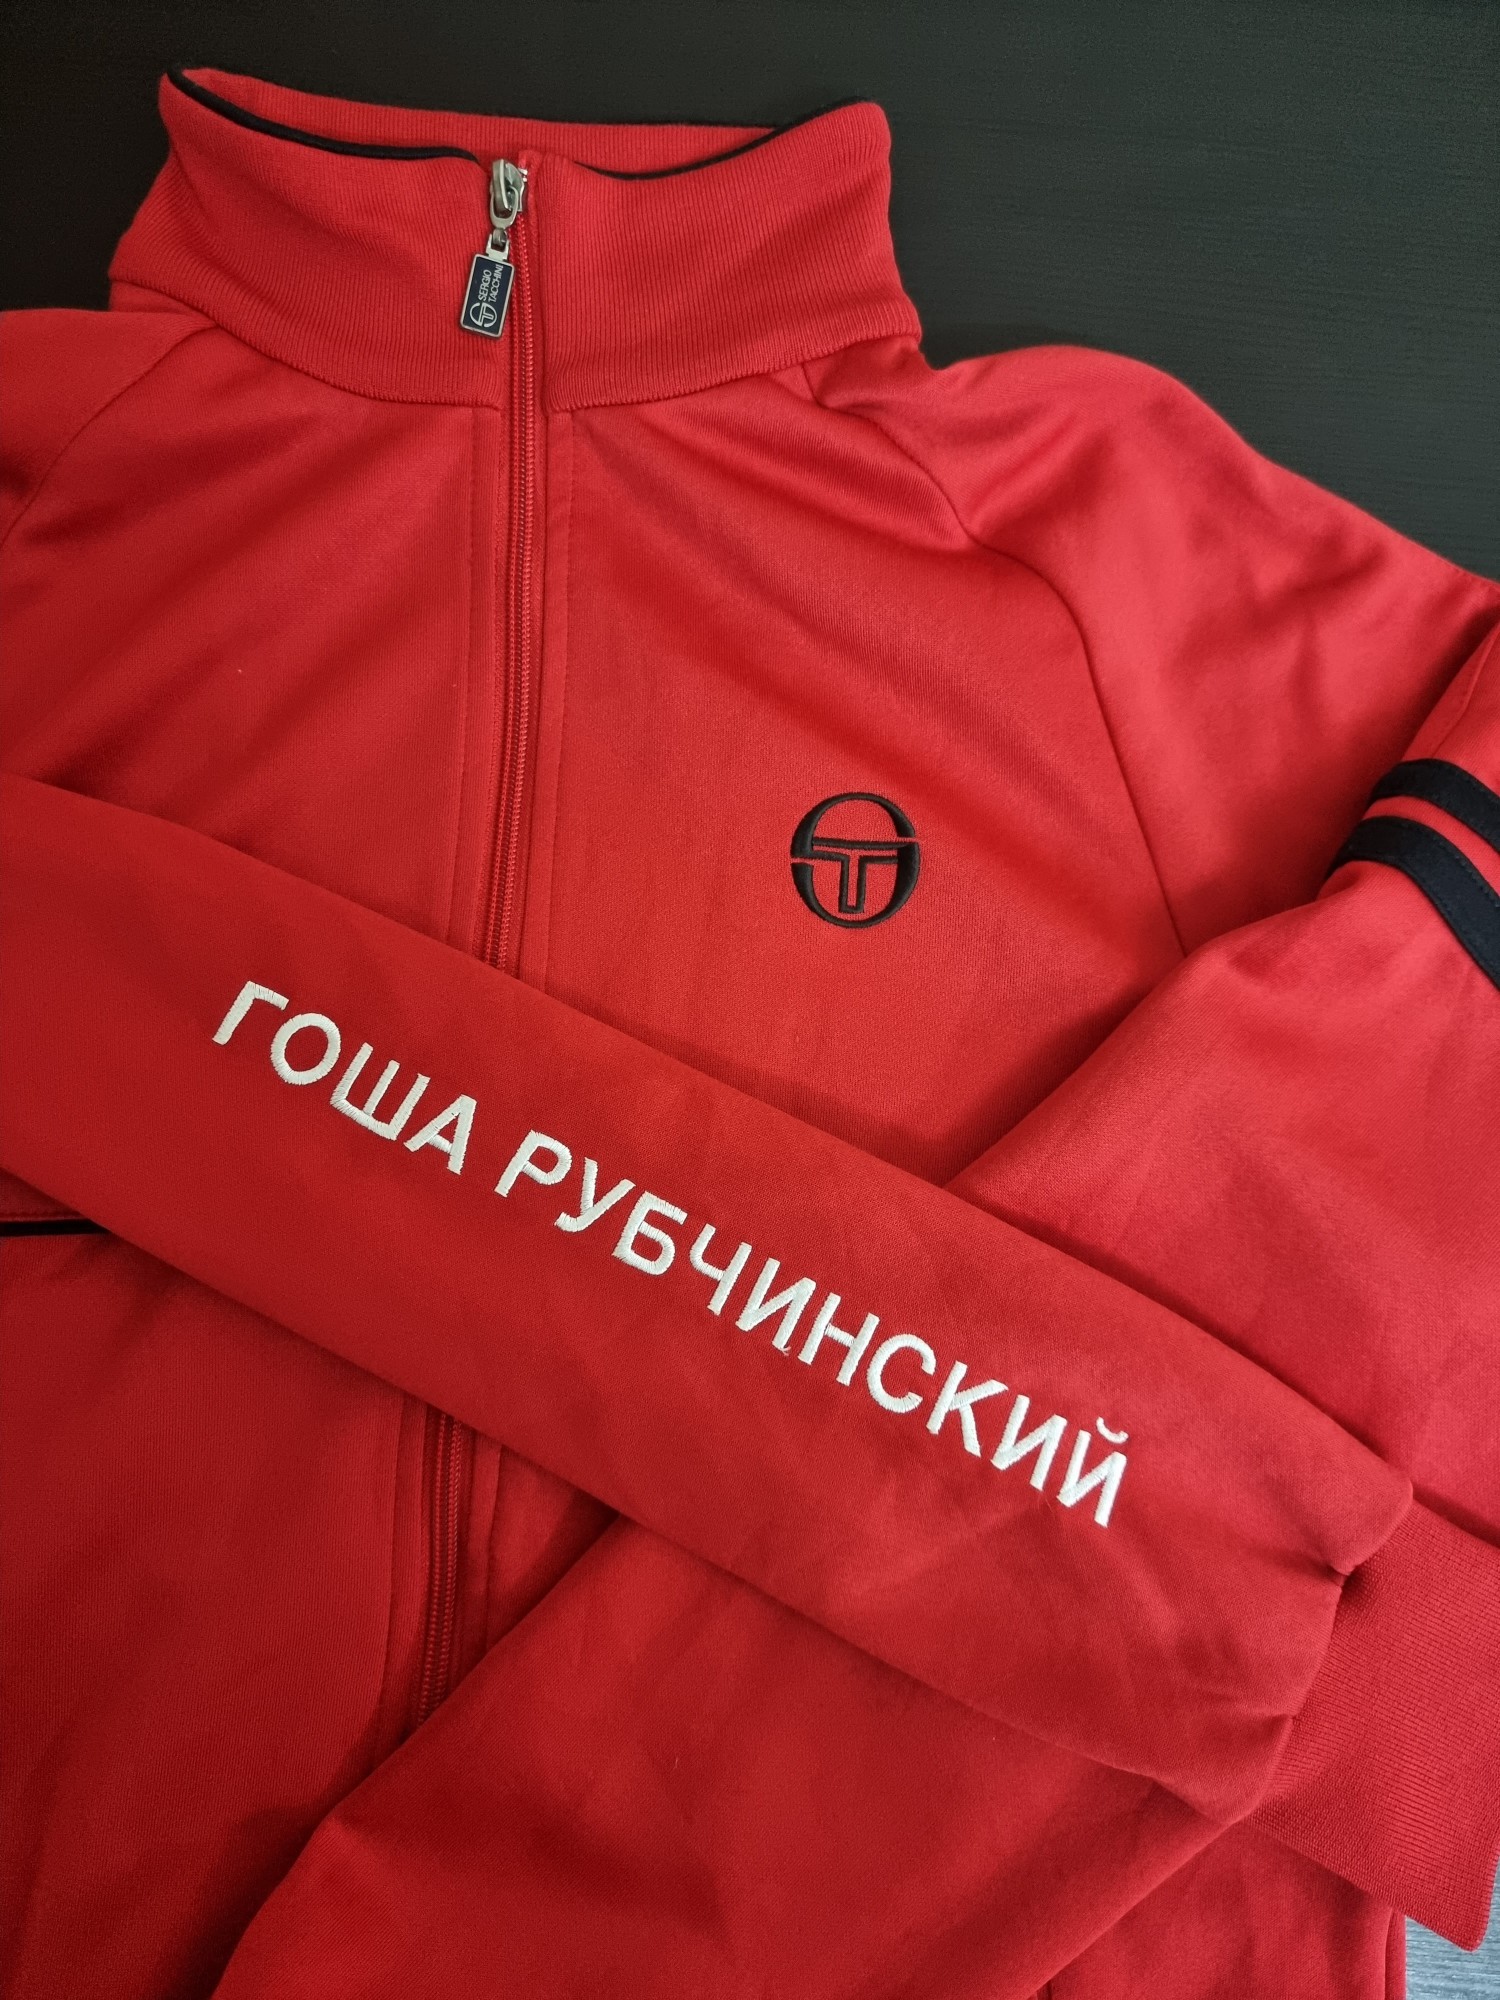 Sergio Tacchini x Gosha Rubchinskiy trainer jacket - 3